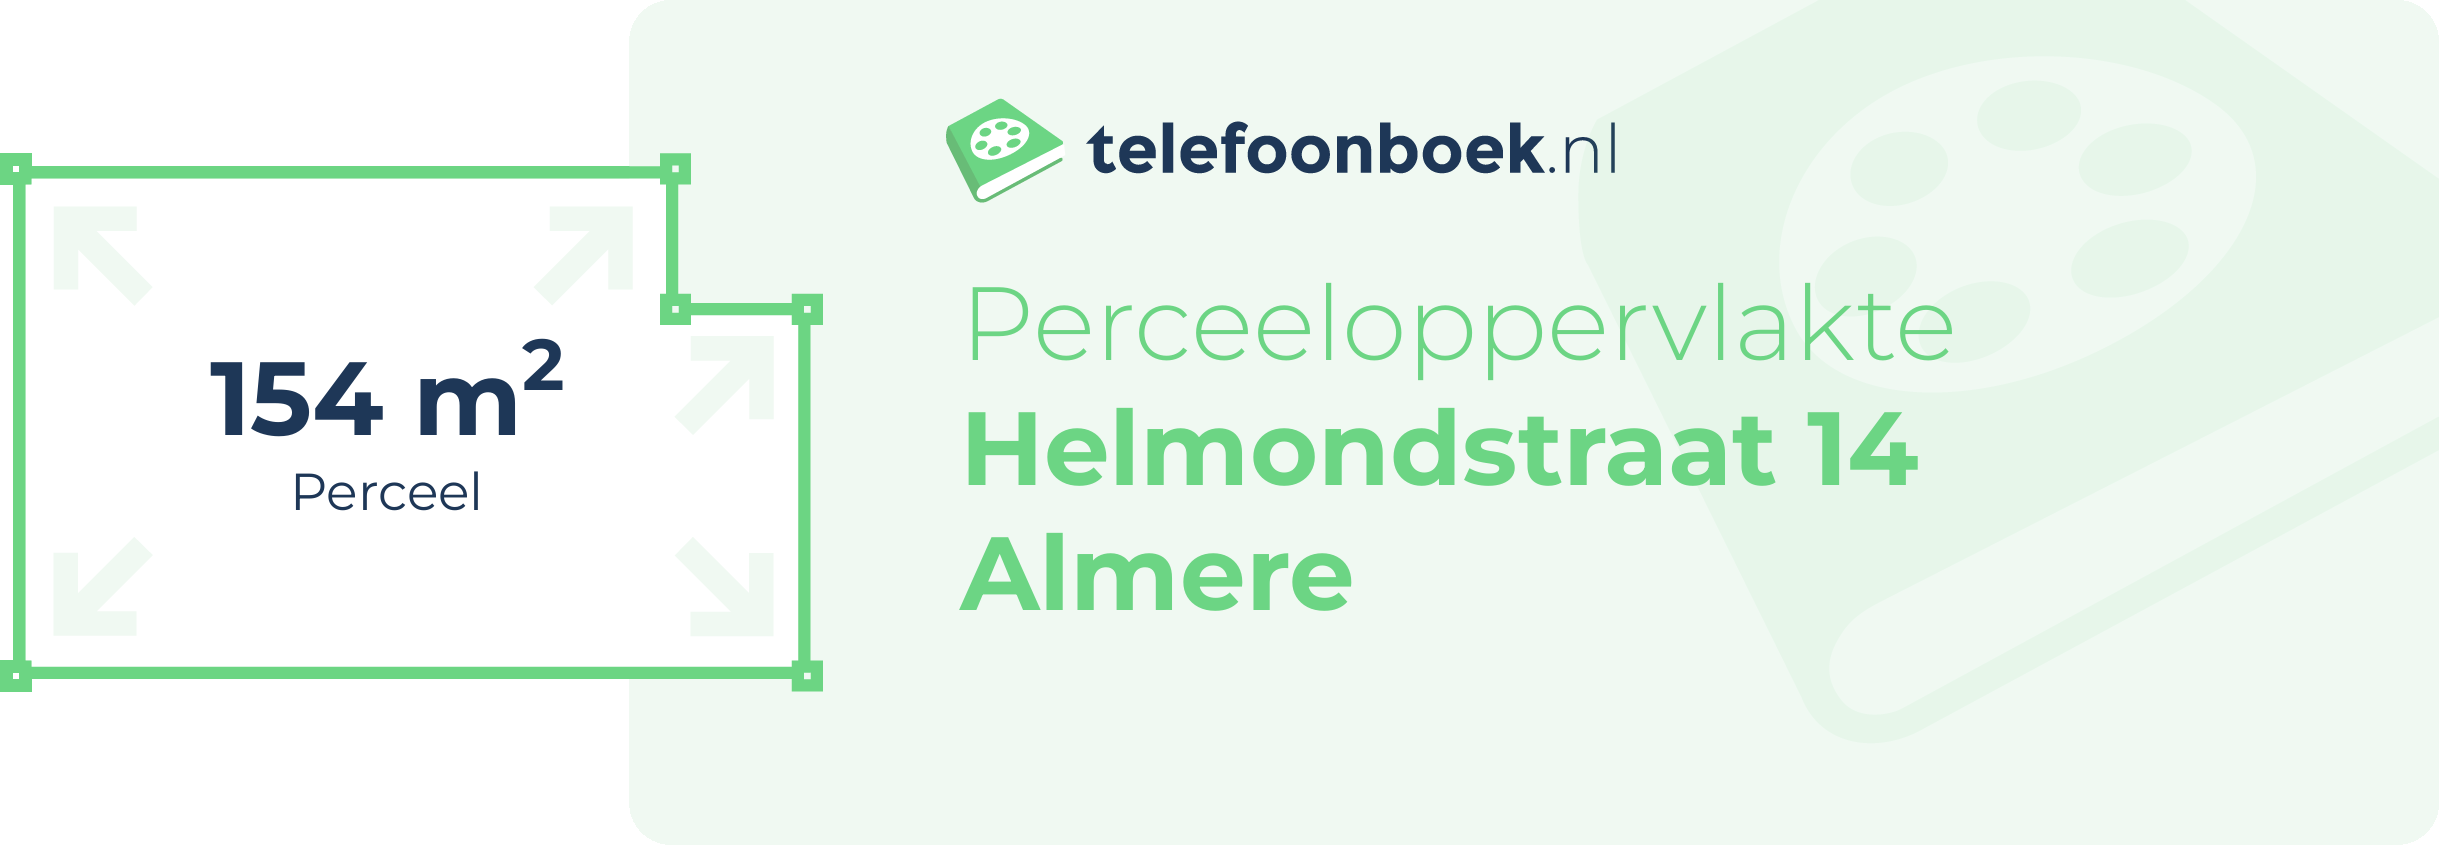 Perceeloppervlakte Helmondstraat 14 Almere